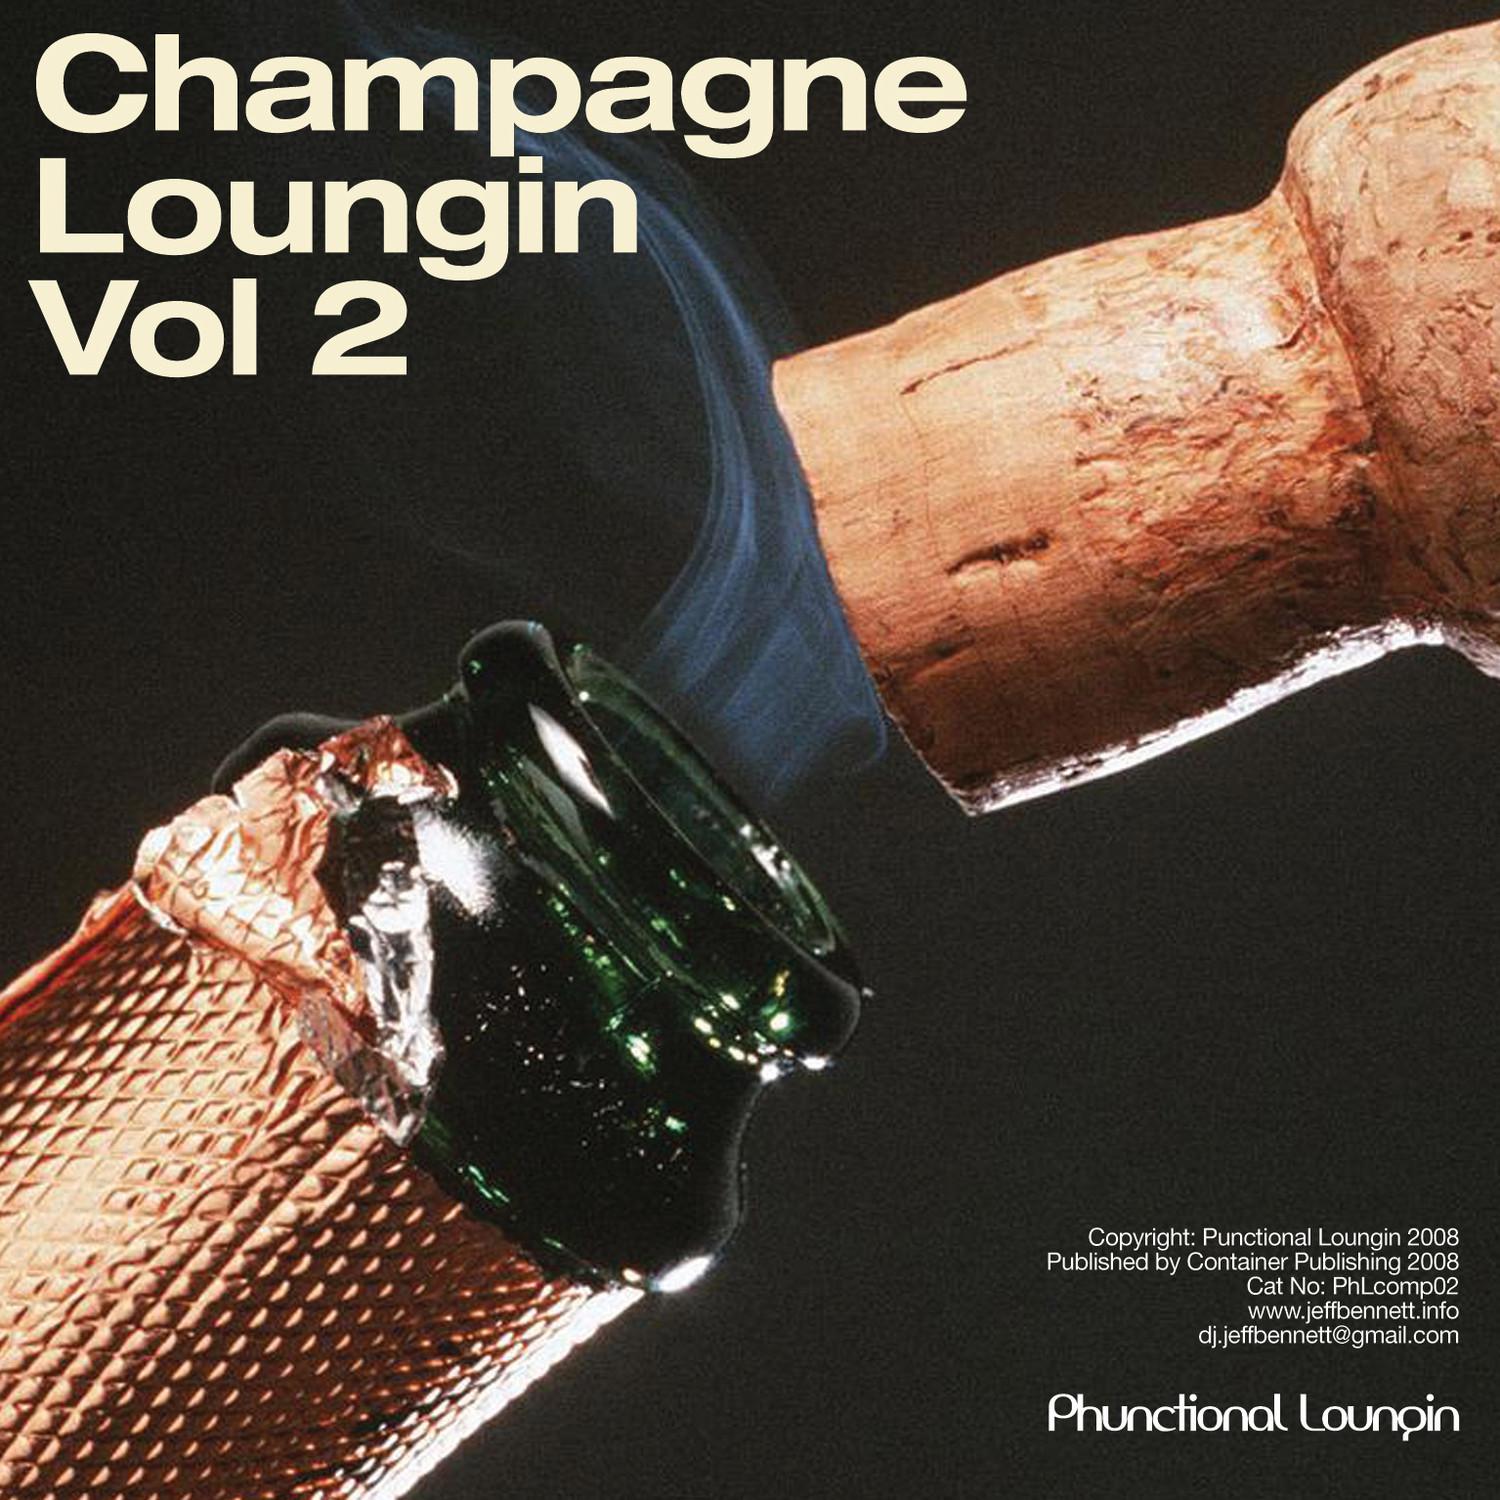 Champagne Loungin vol 2